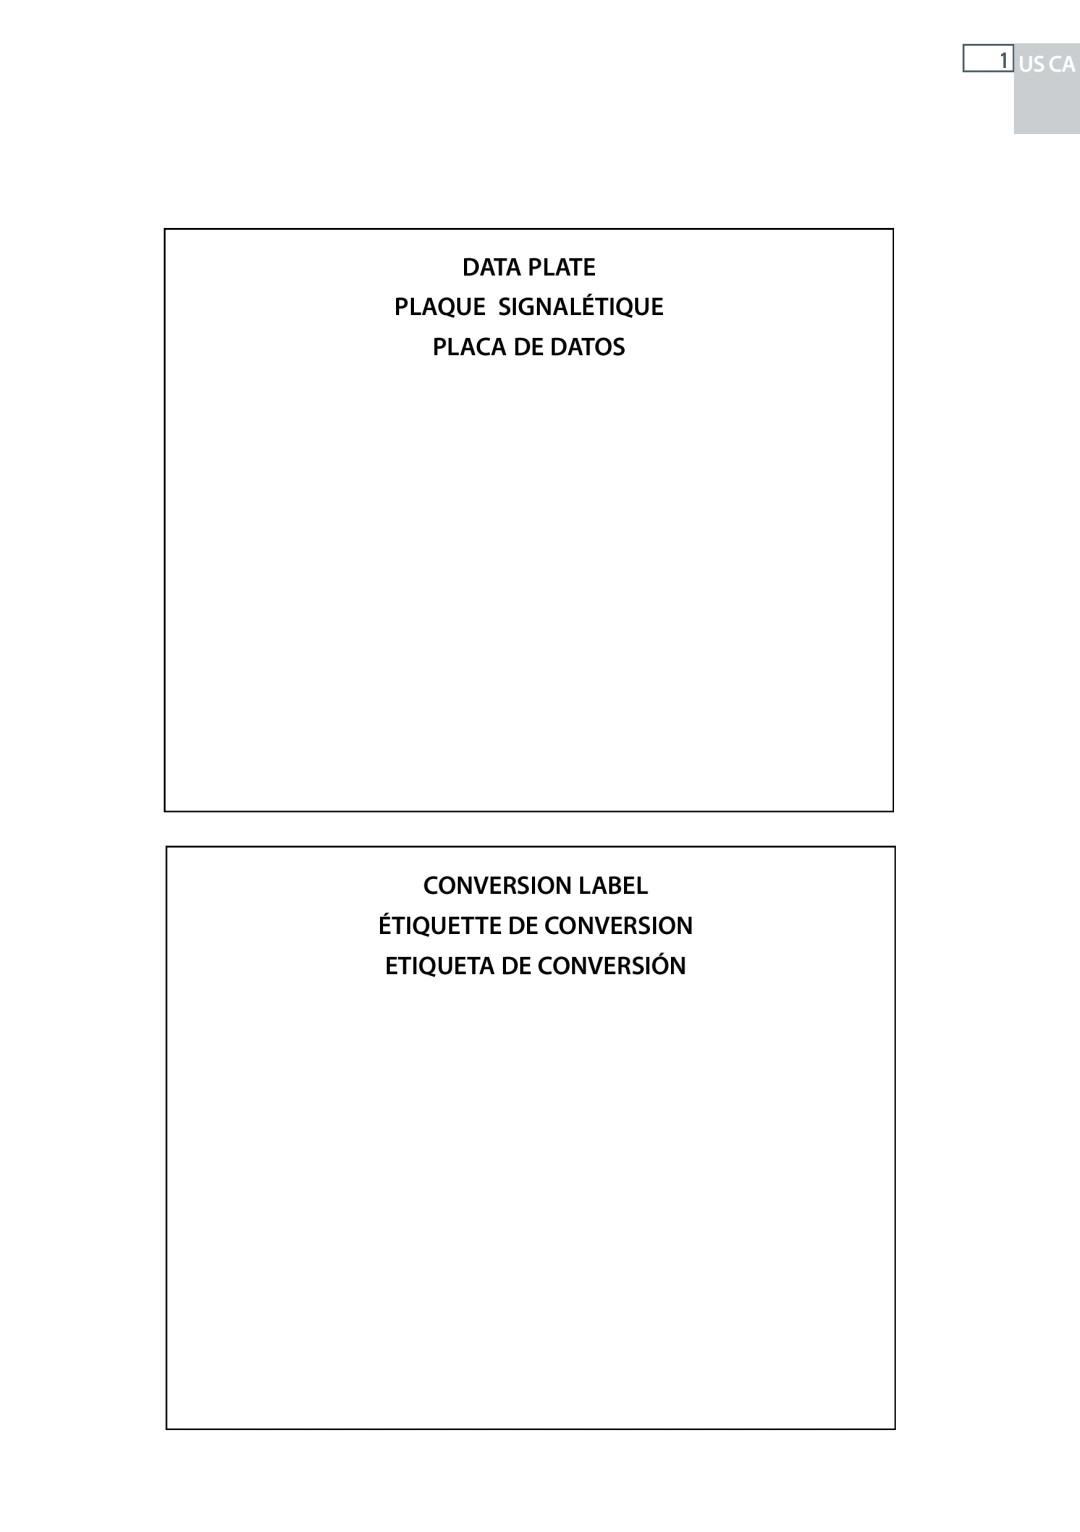 Fisher & Paykel CG122, CG244 Data Plate Plaque Signalétique Placa De Datos, Conversion Label, Us Ca 